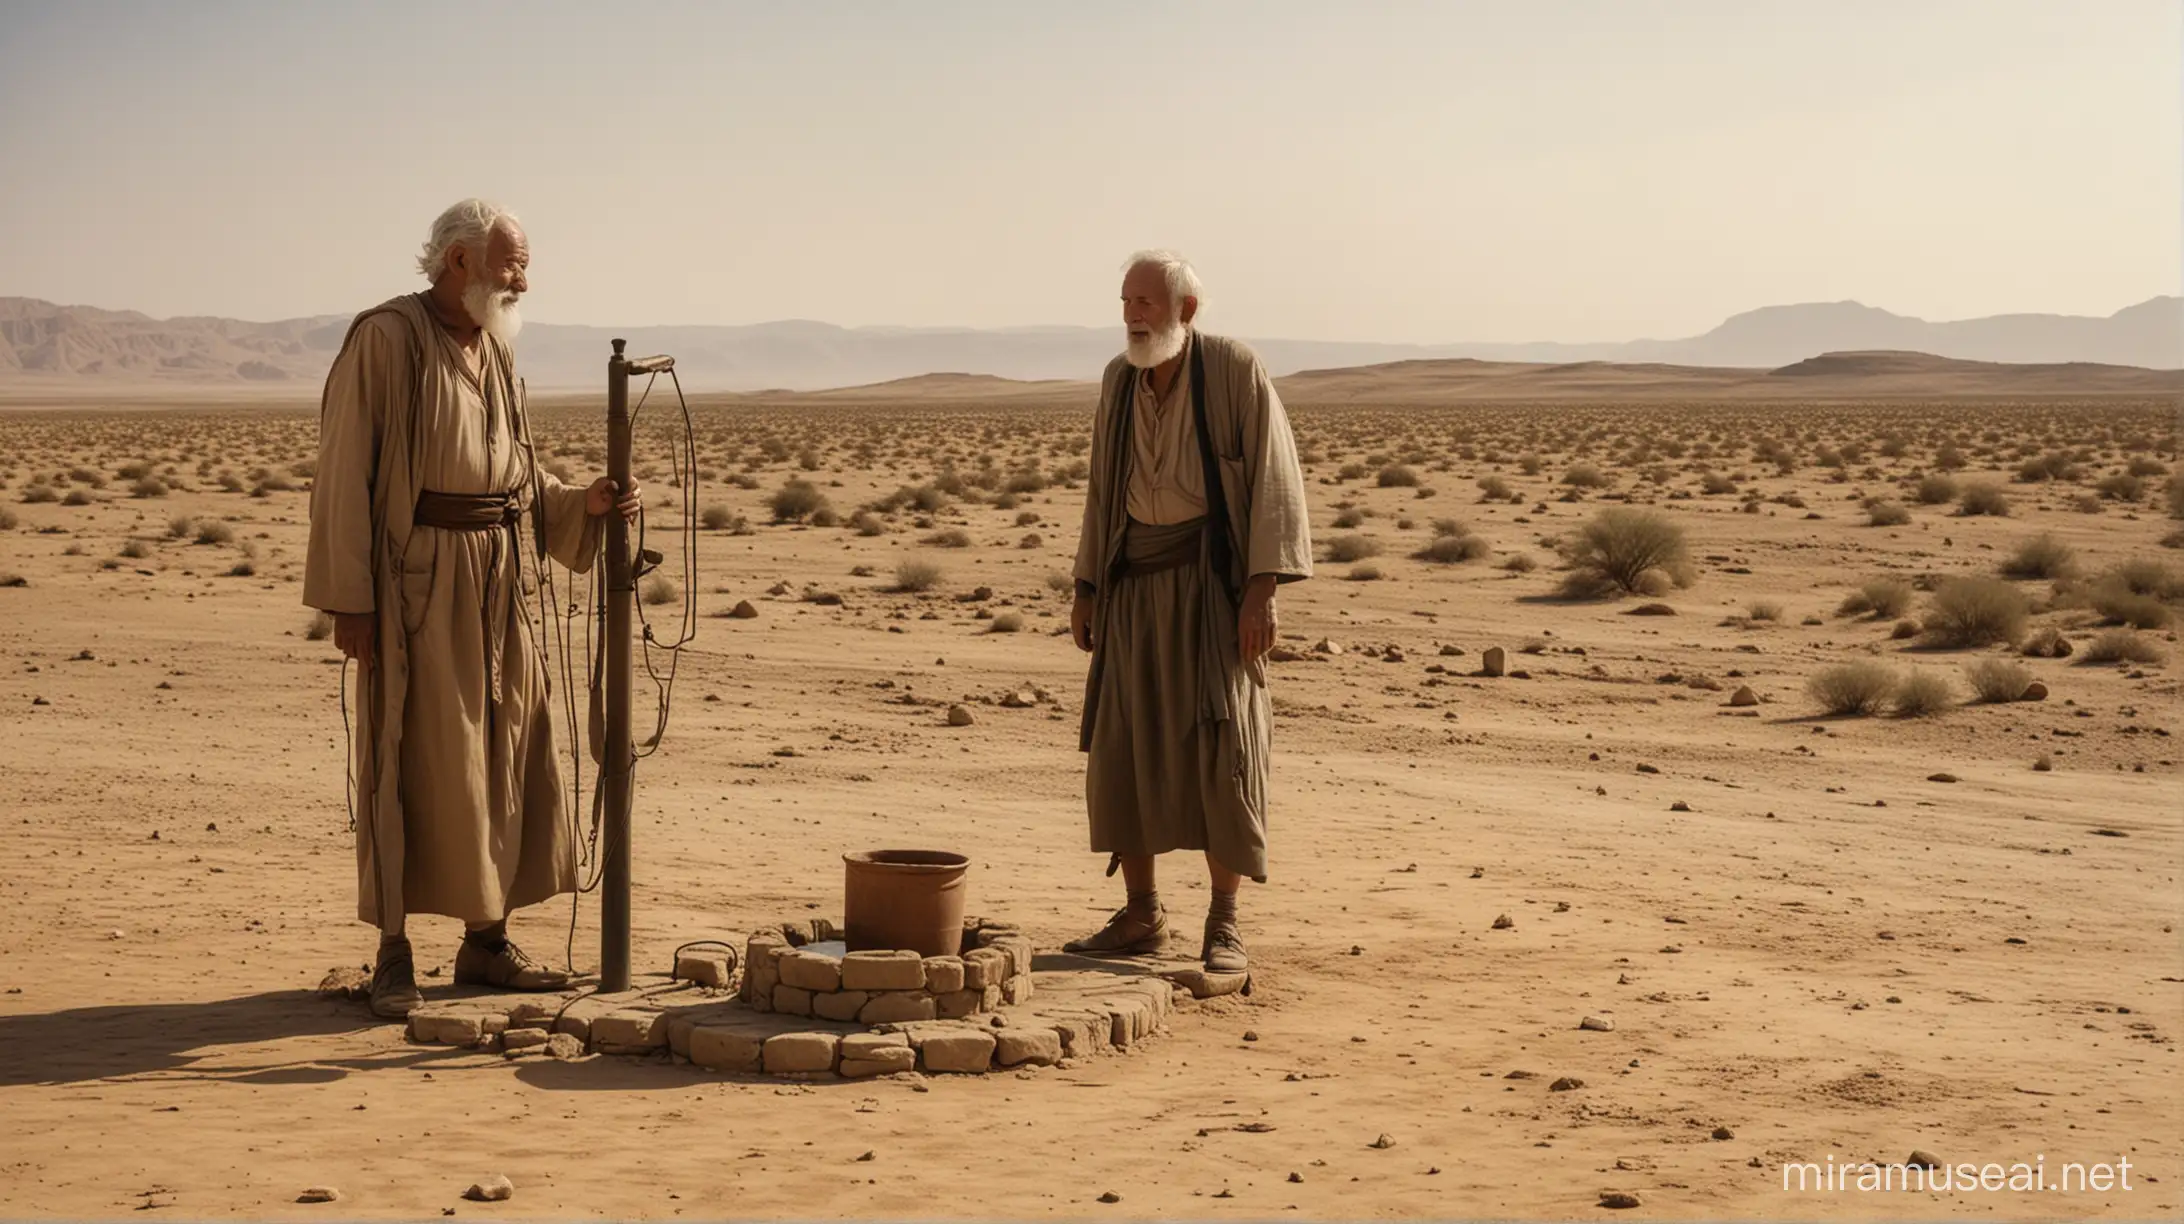 Elderly Men Gathering by a Distant Water Well in Ancient Desert Scene